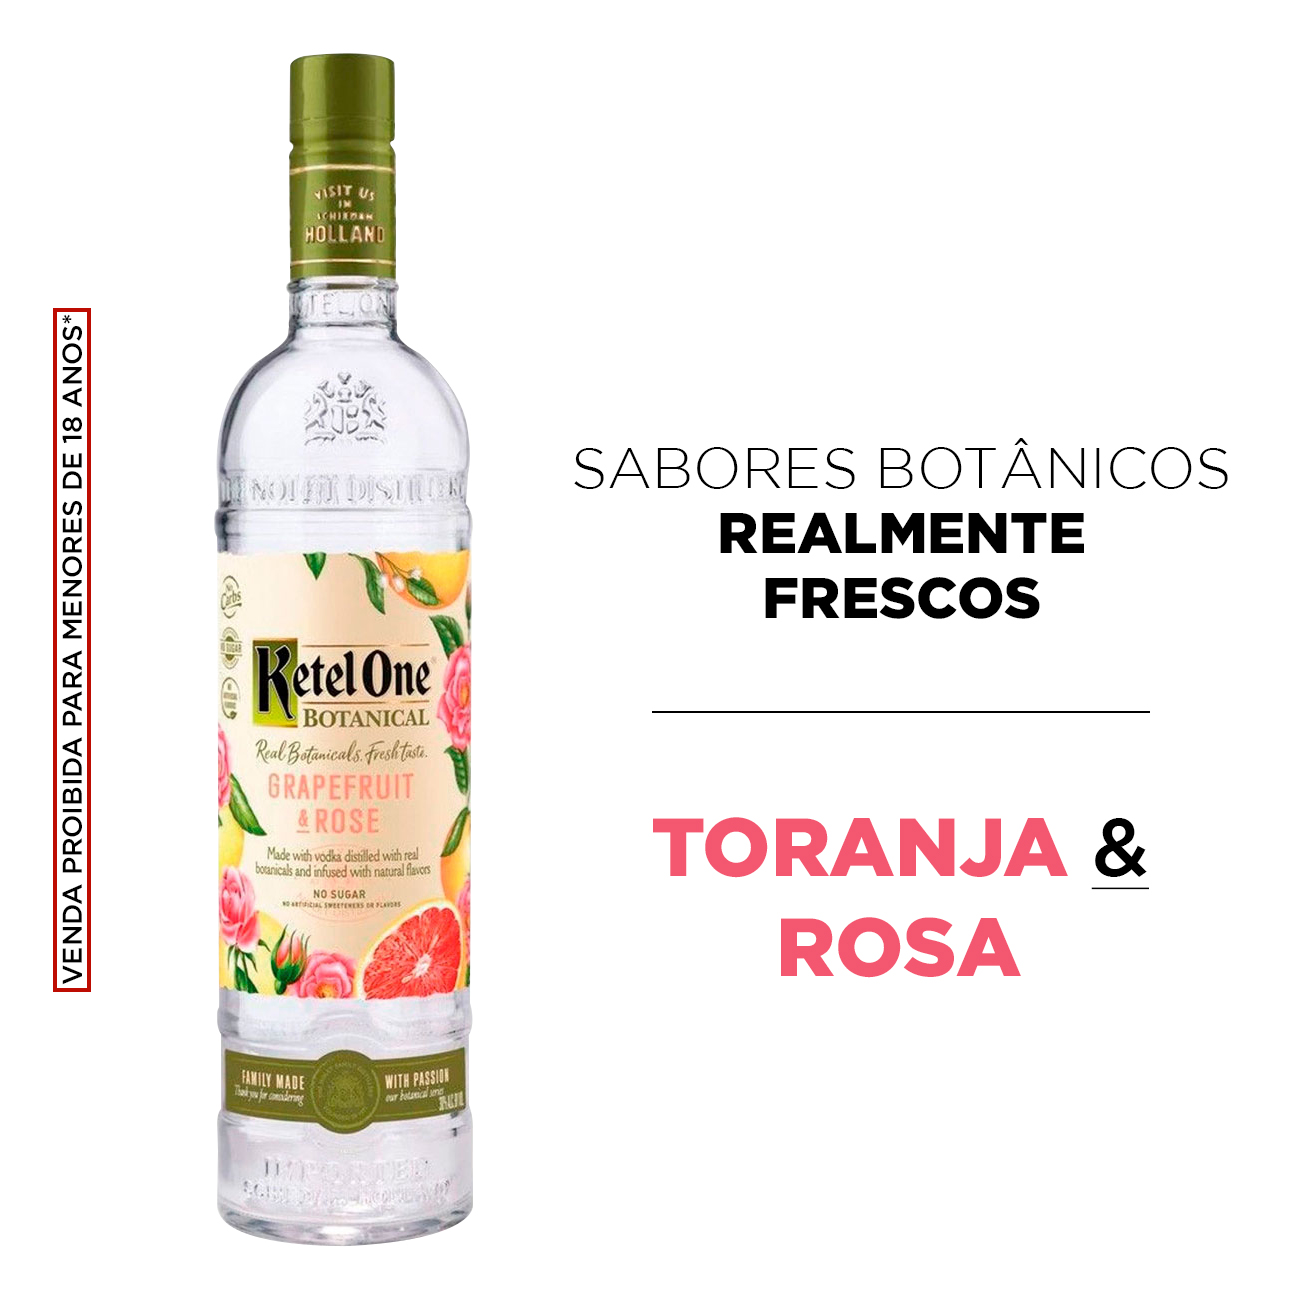 Vodka Holandesa Ketel One Botanical Grapefruit & Rose 750ml